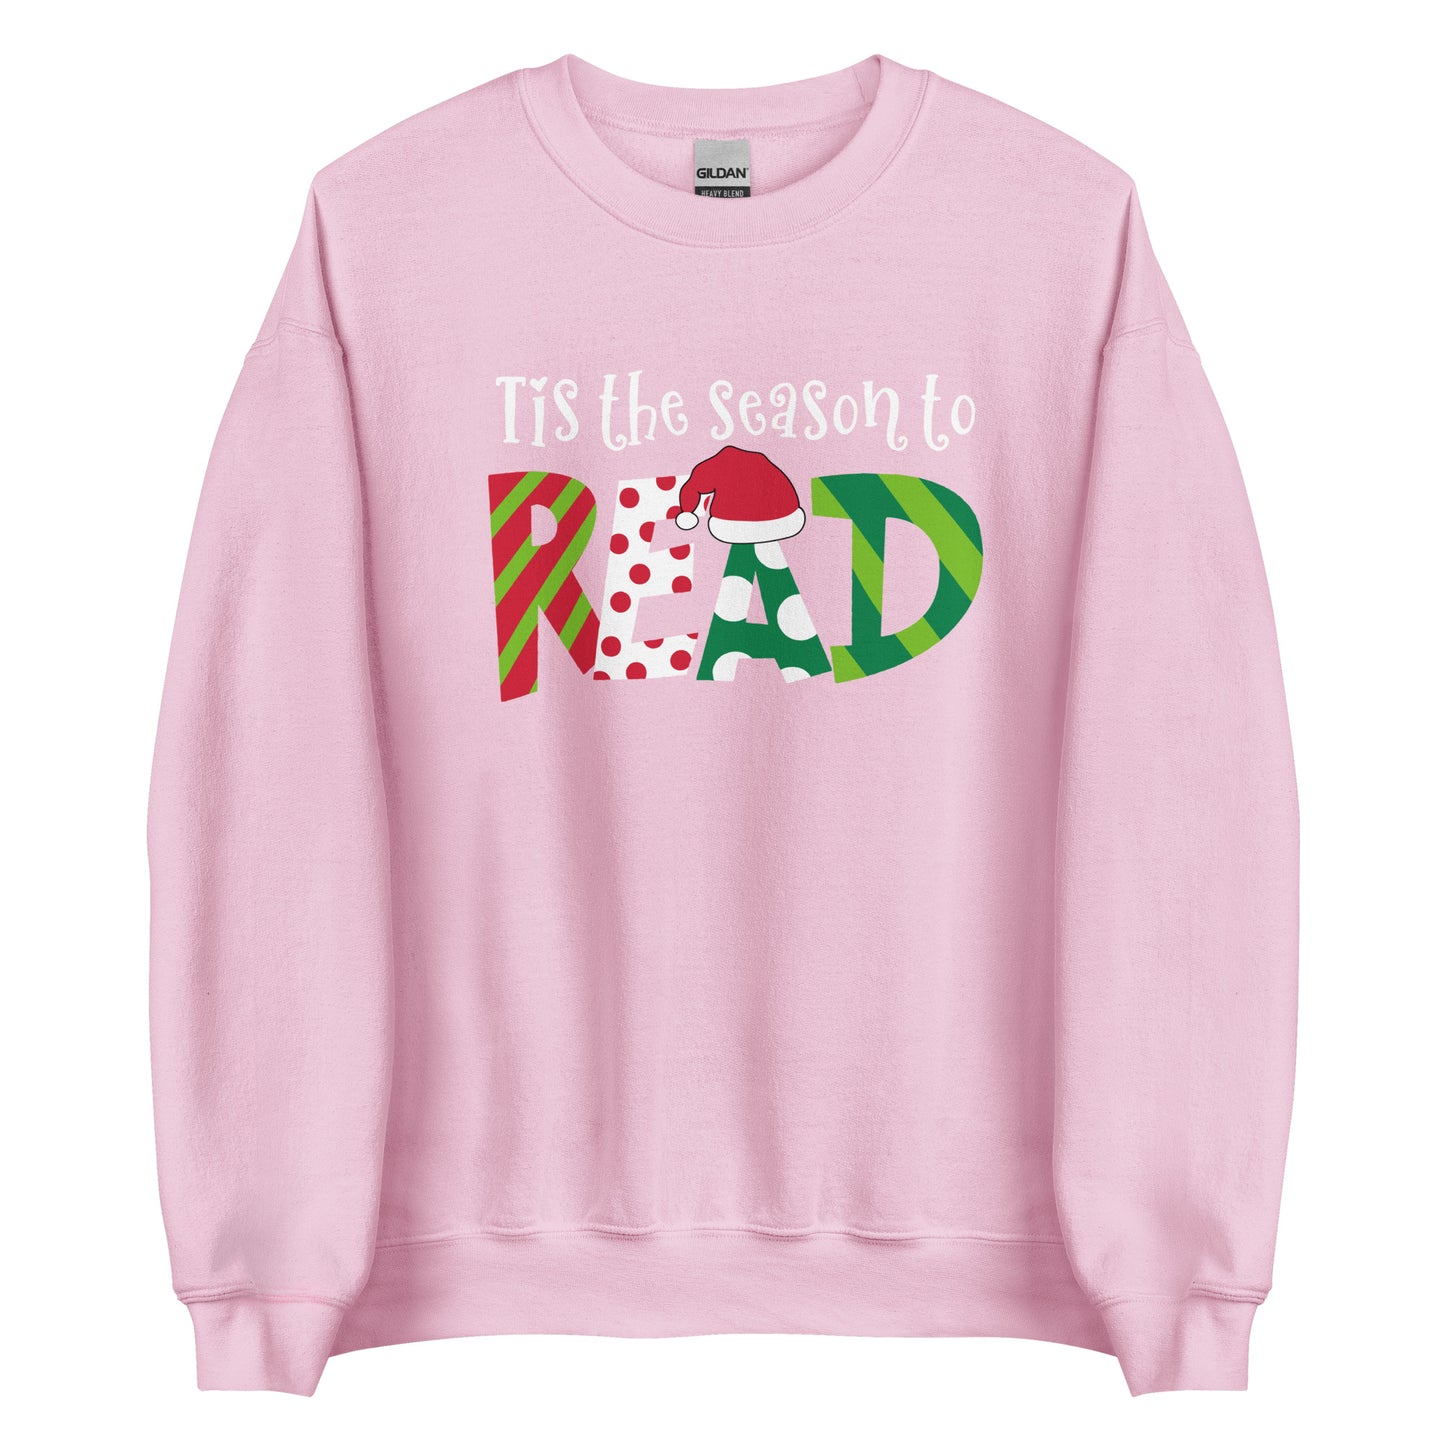 tis the season to read (santa hat) sweatshirt